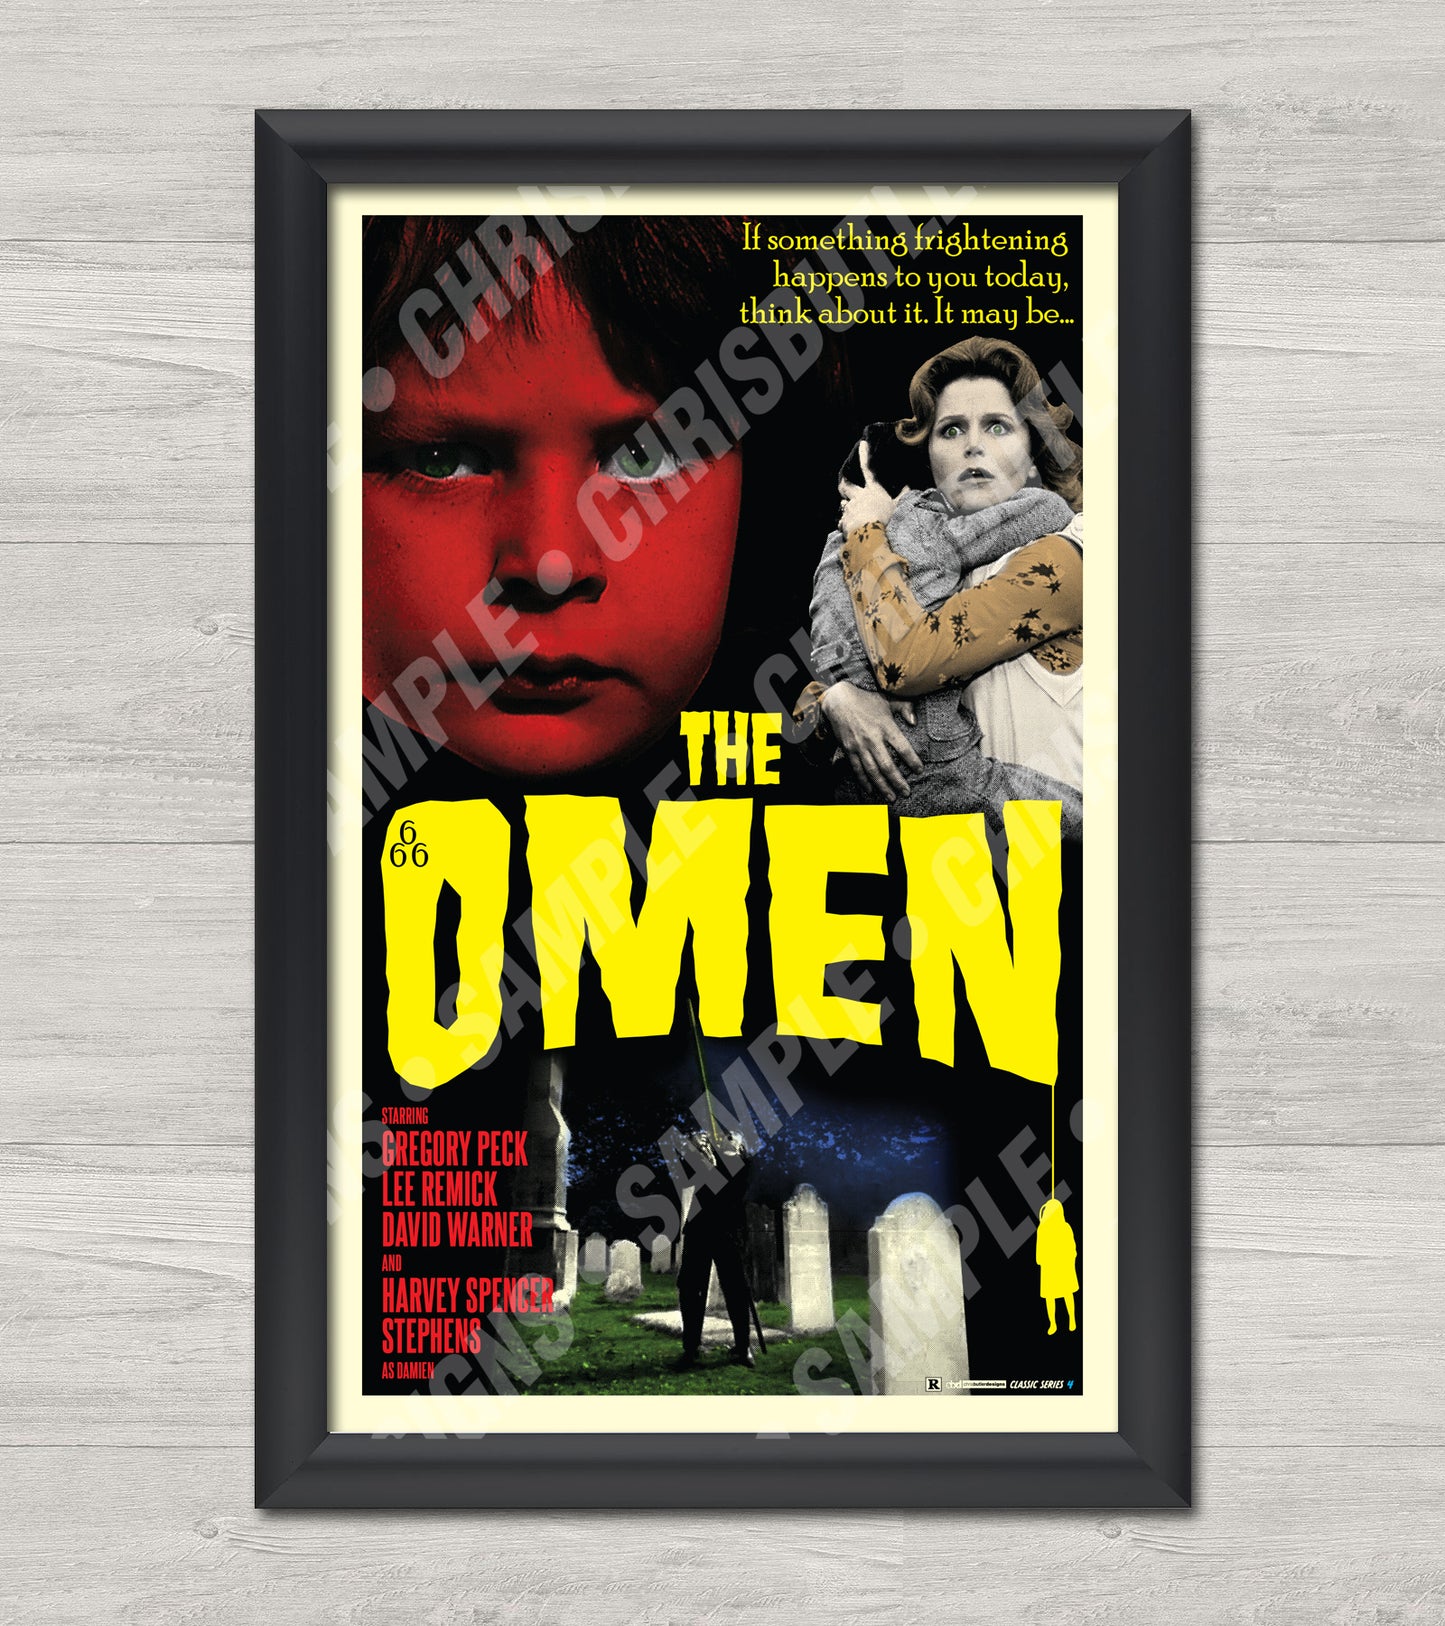 The Omen (Classic Series) 11x17 Alternative Movie Poster